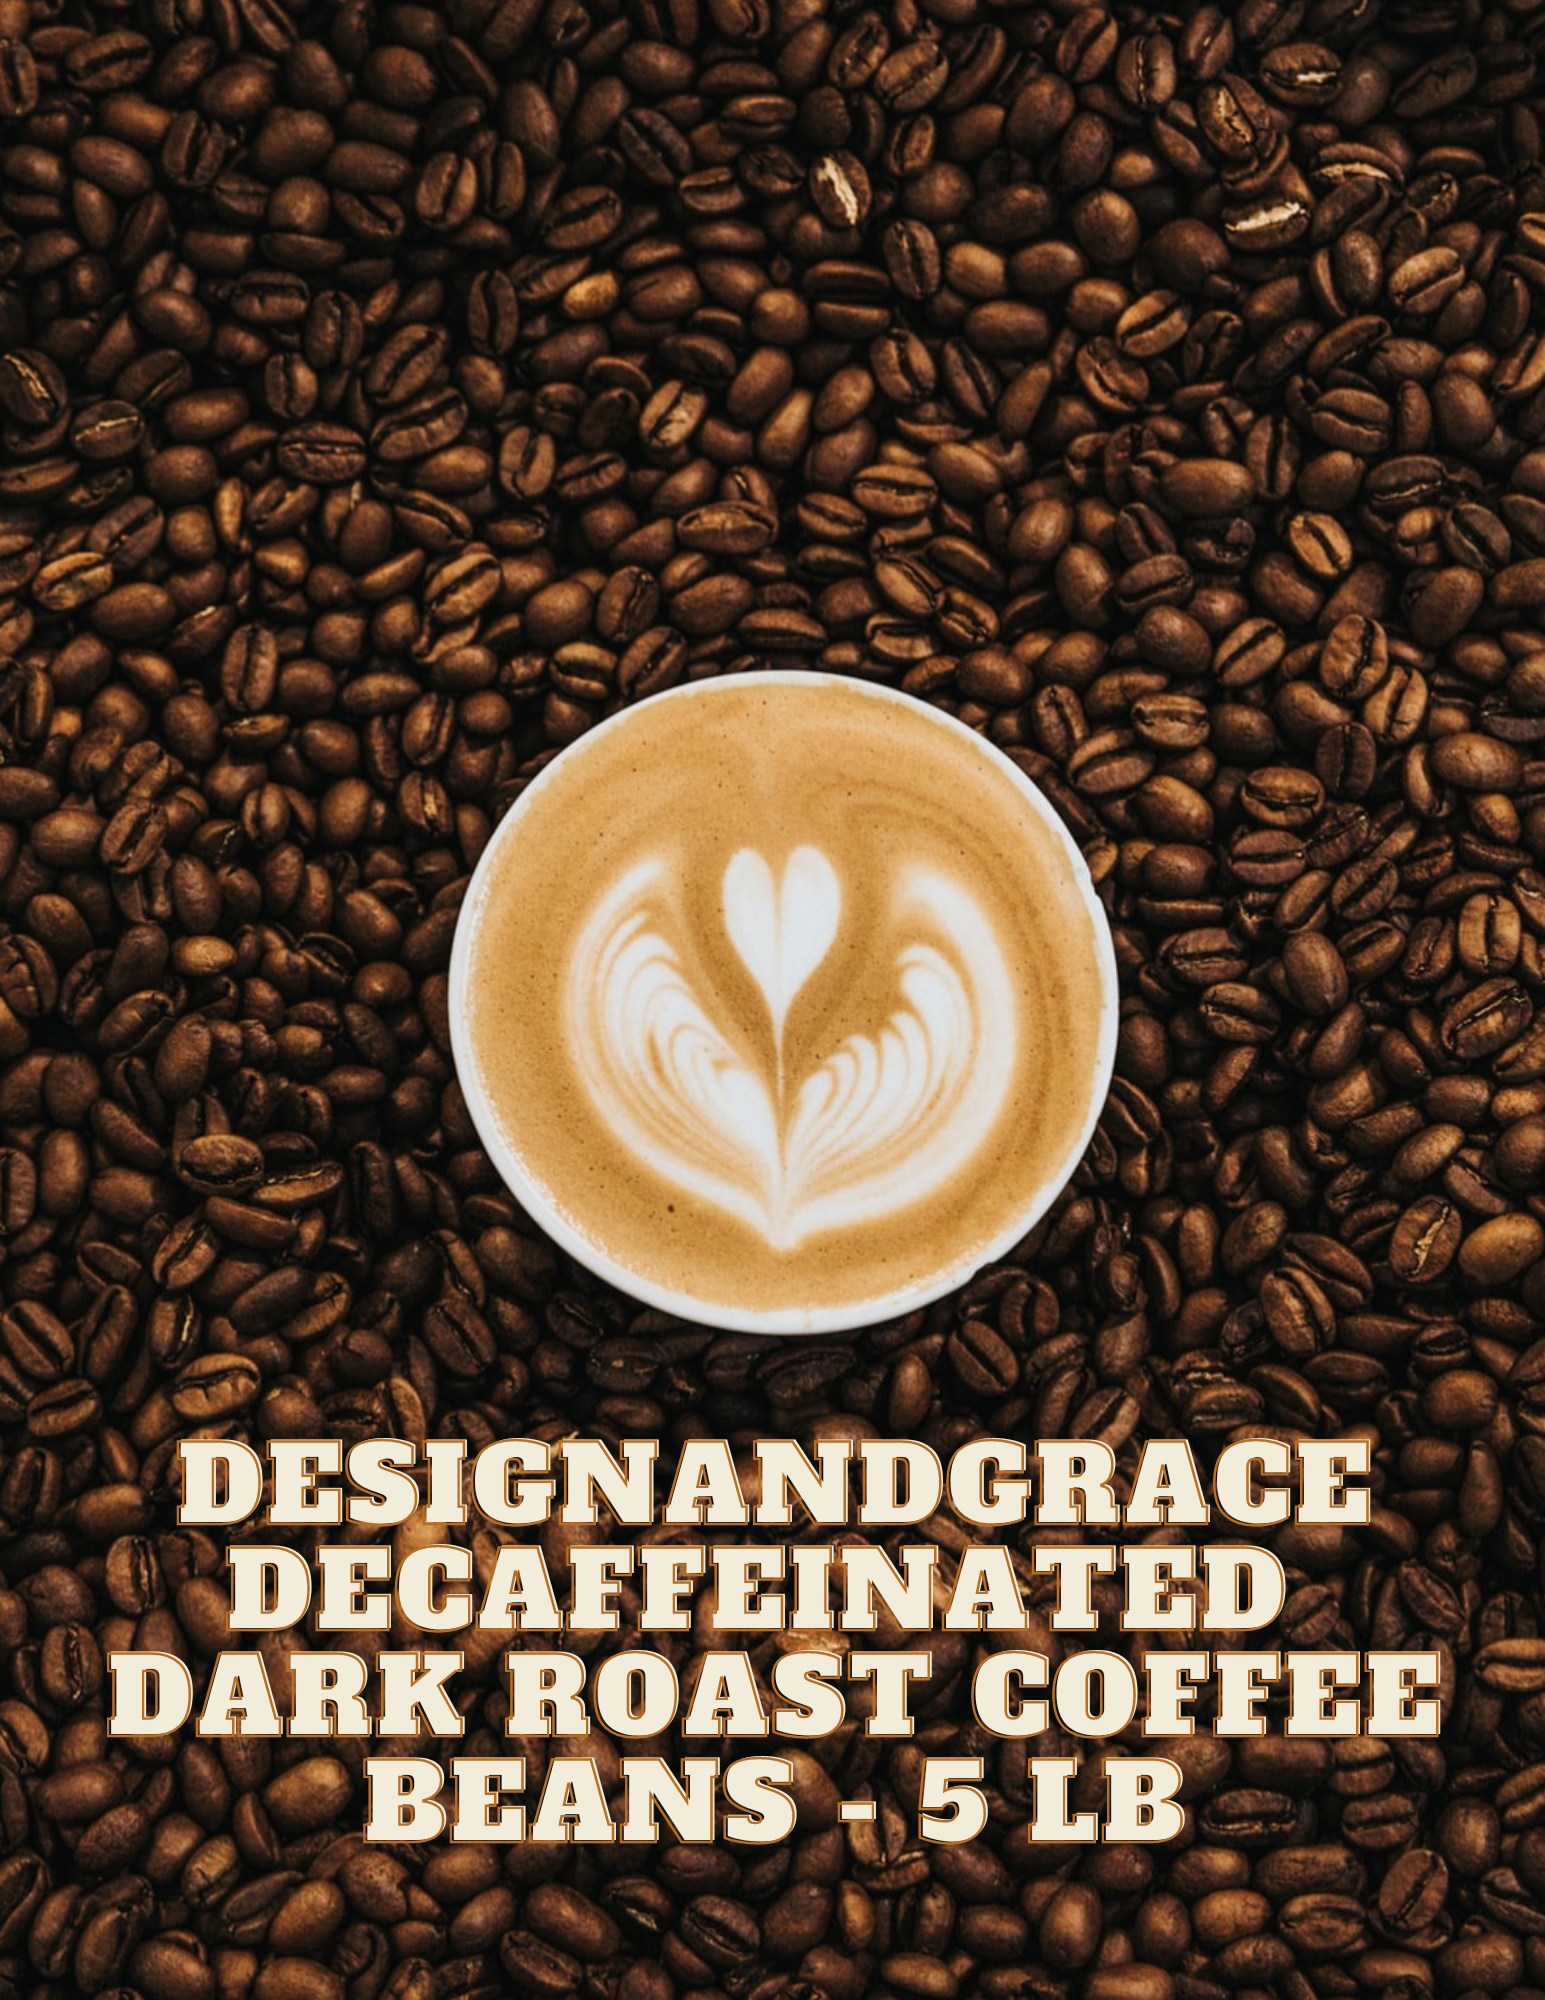 DesignandGrace Decaffeinated Dark Roast Coffee Beans - 5 lb